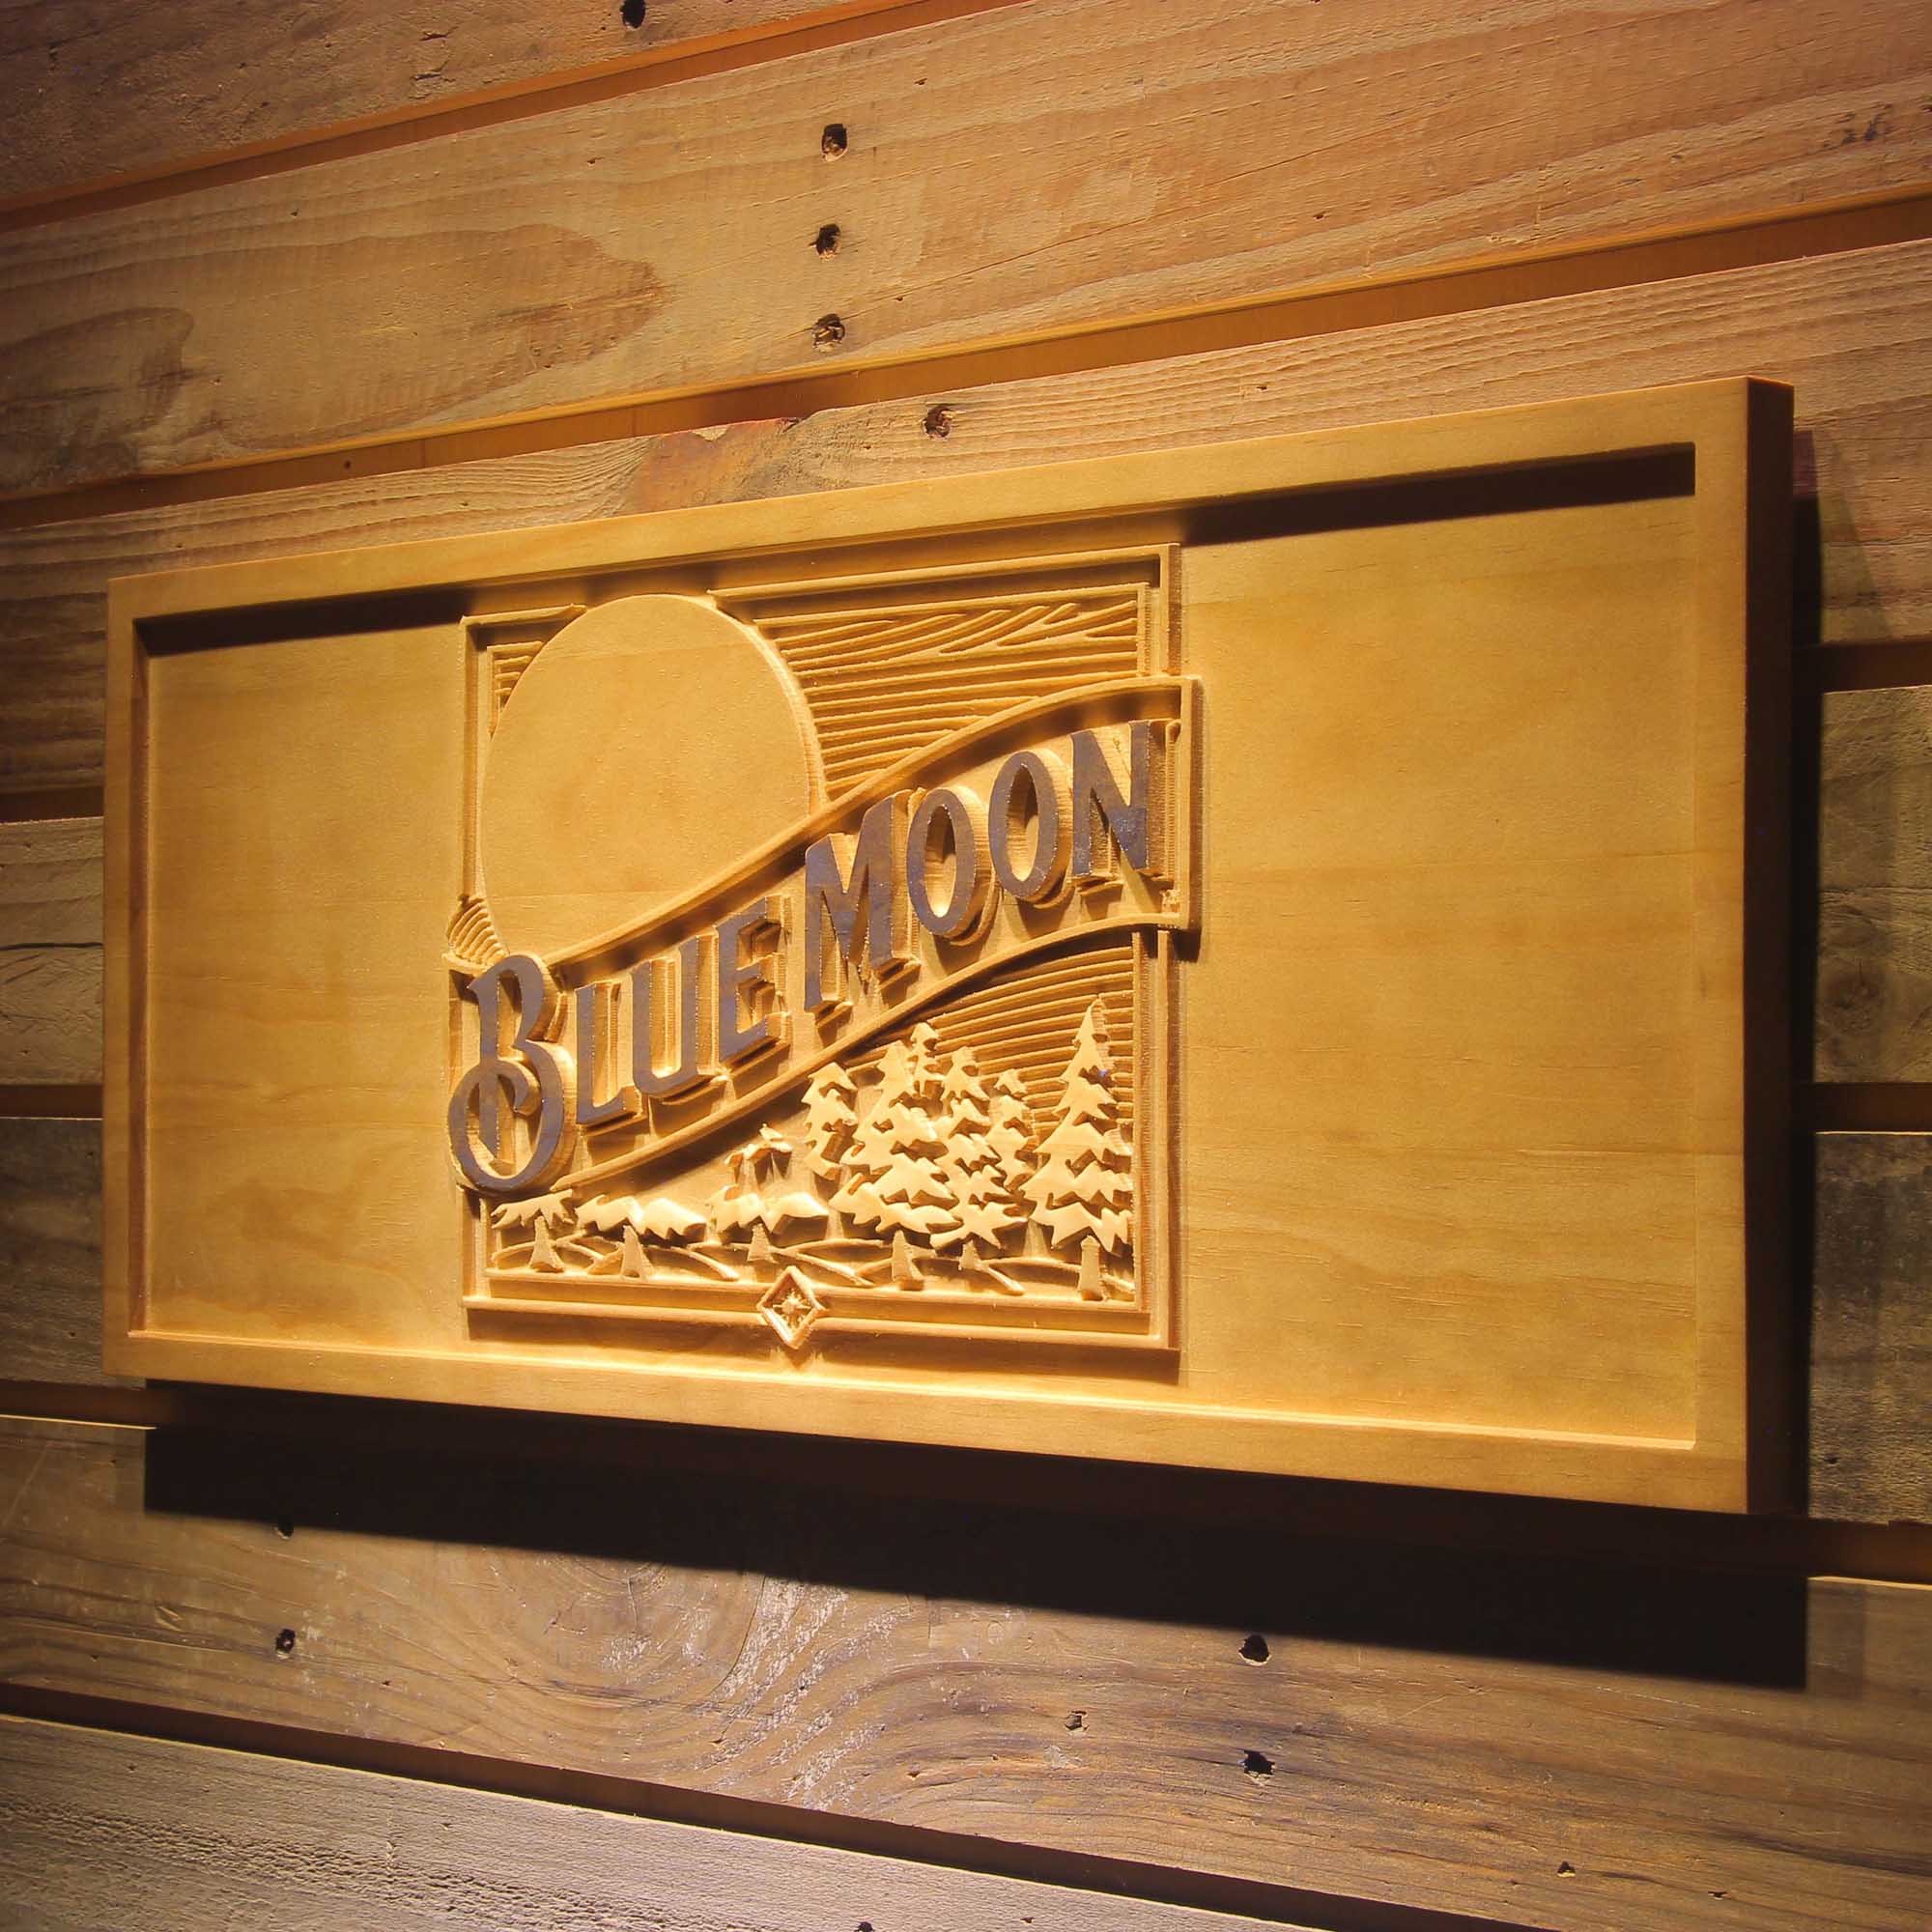 Blue Moon Beer 3D Wooden Engrave Sign